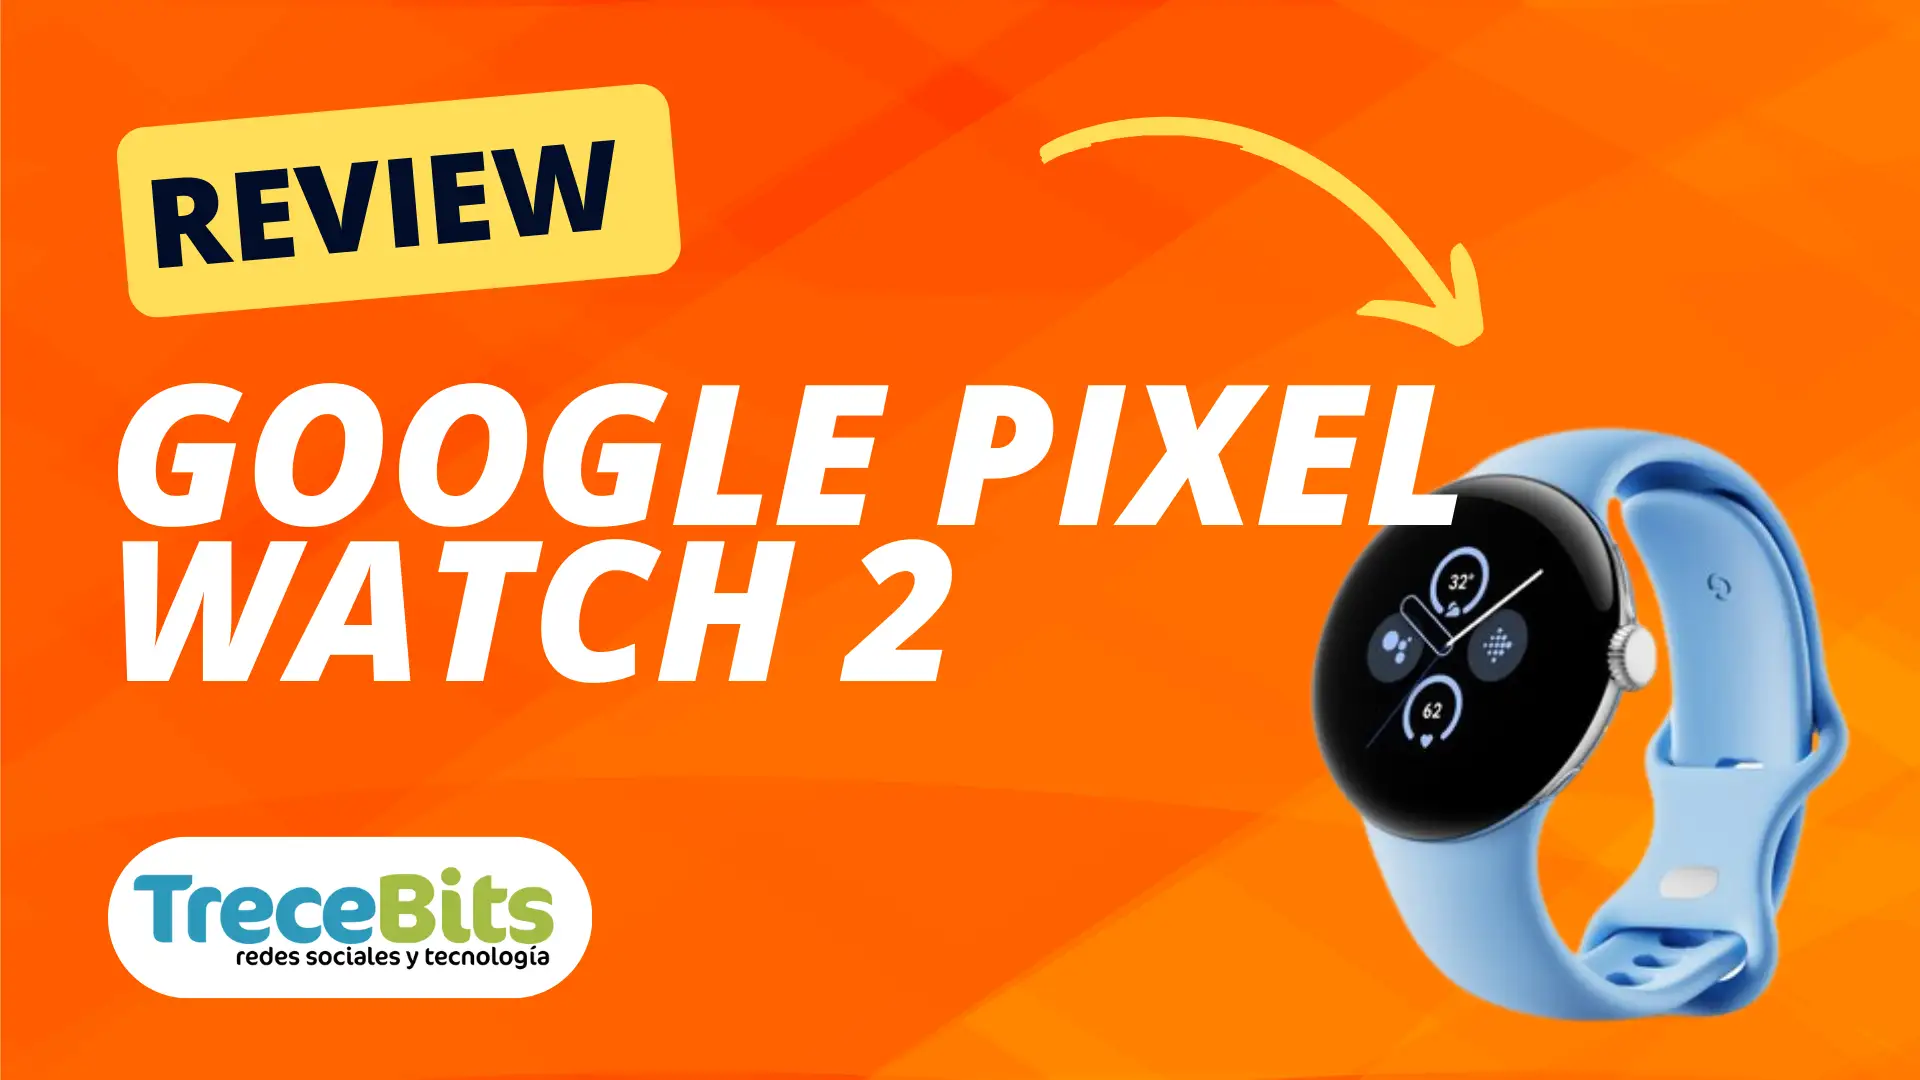 Review Google Pixel Watch 2